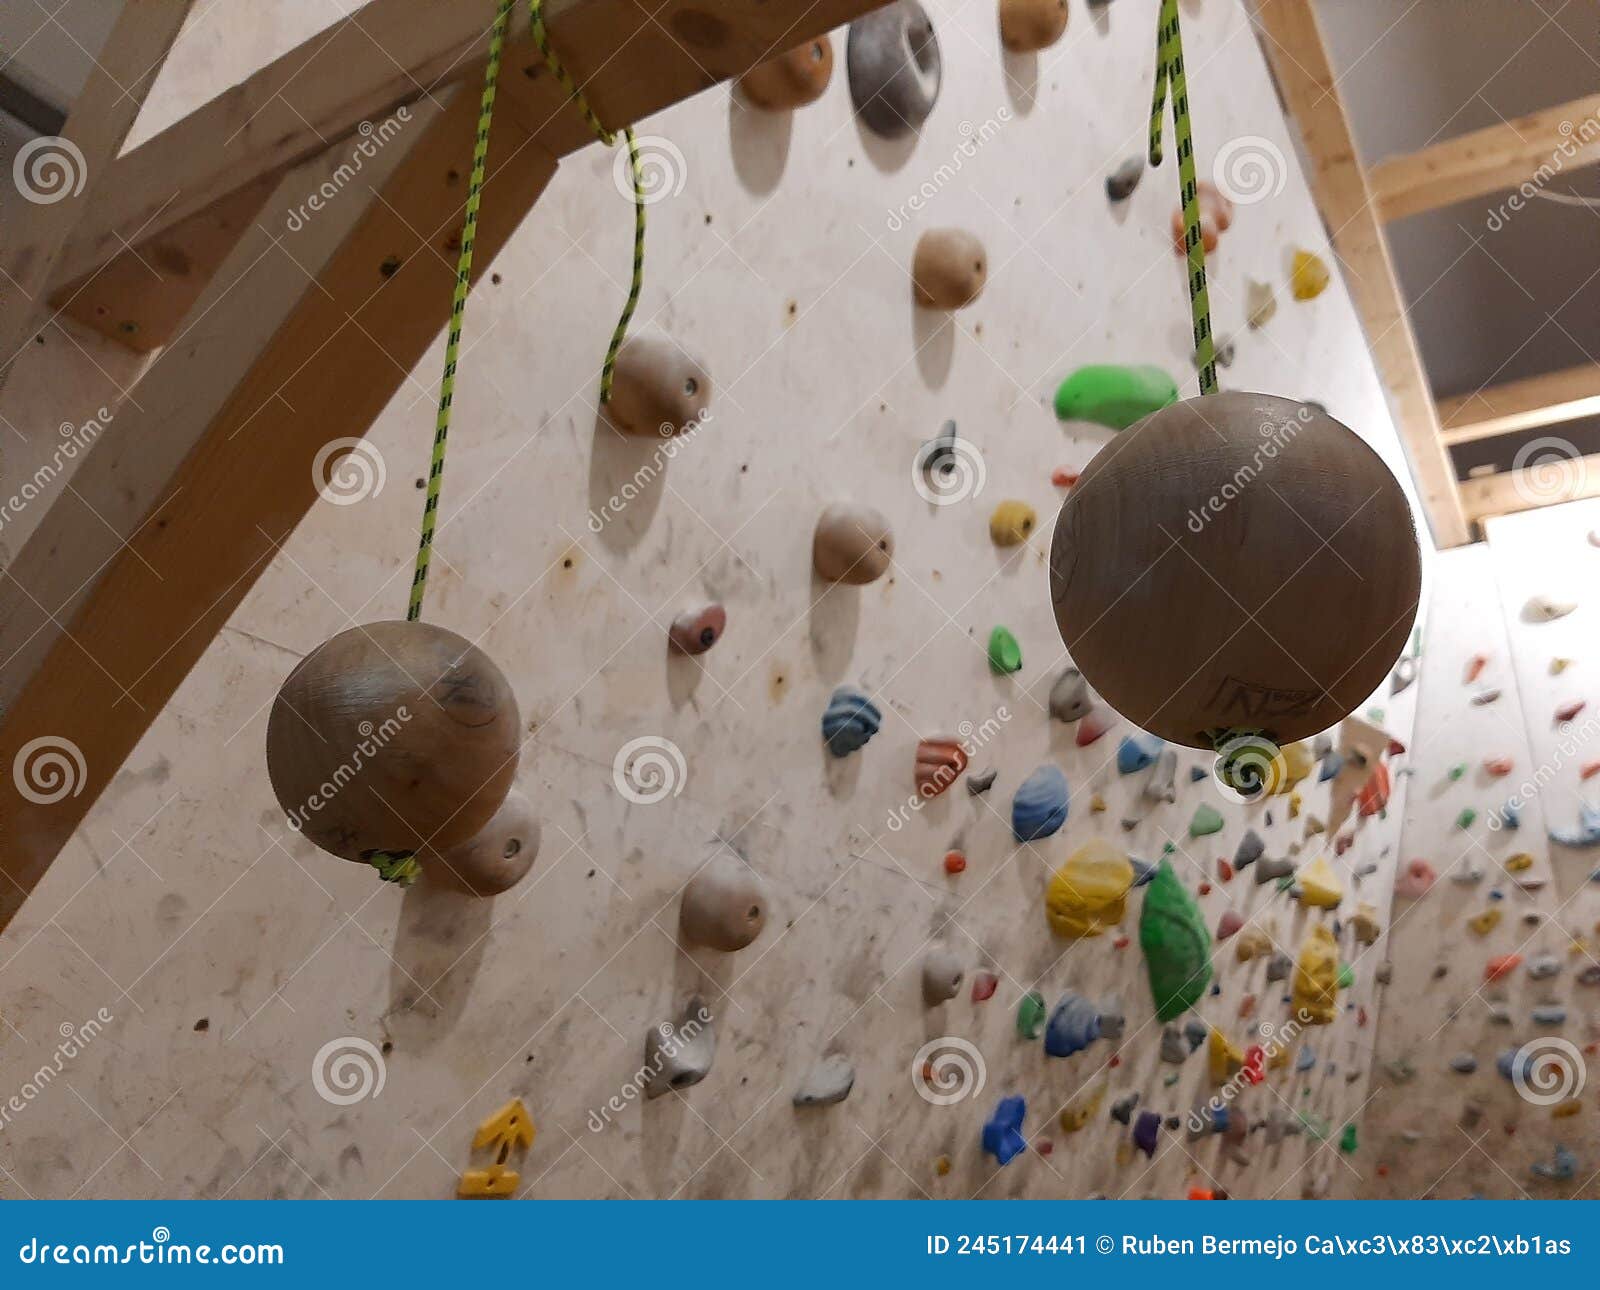 suspension balls for climbing training hang on a climbing wall